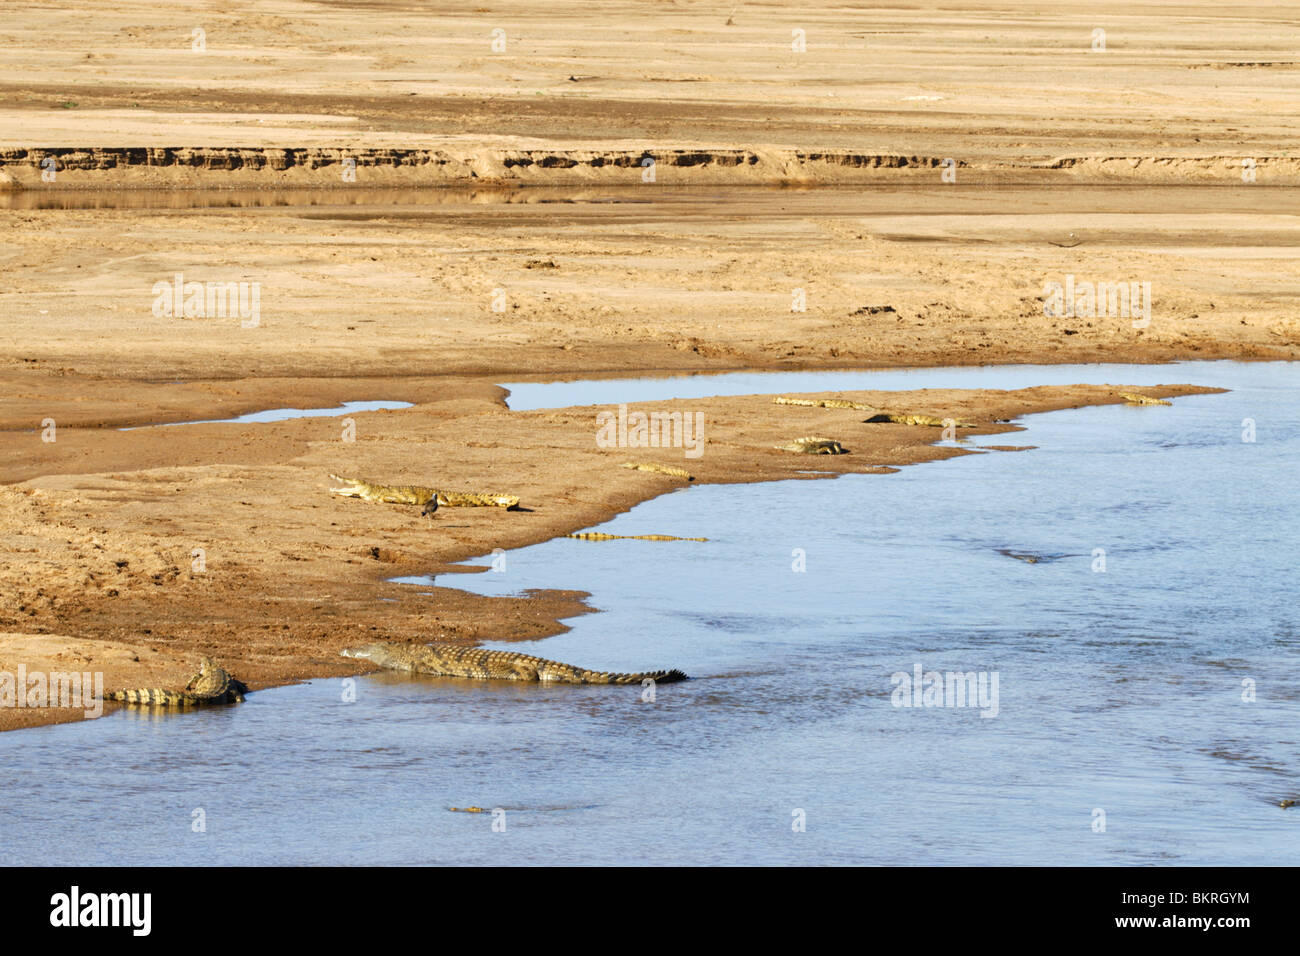 Limpopo River with crocodiles Stock Photo